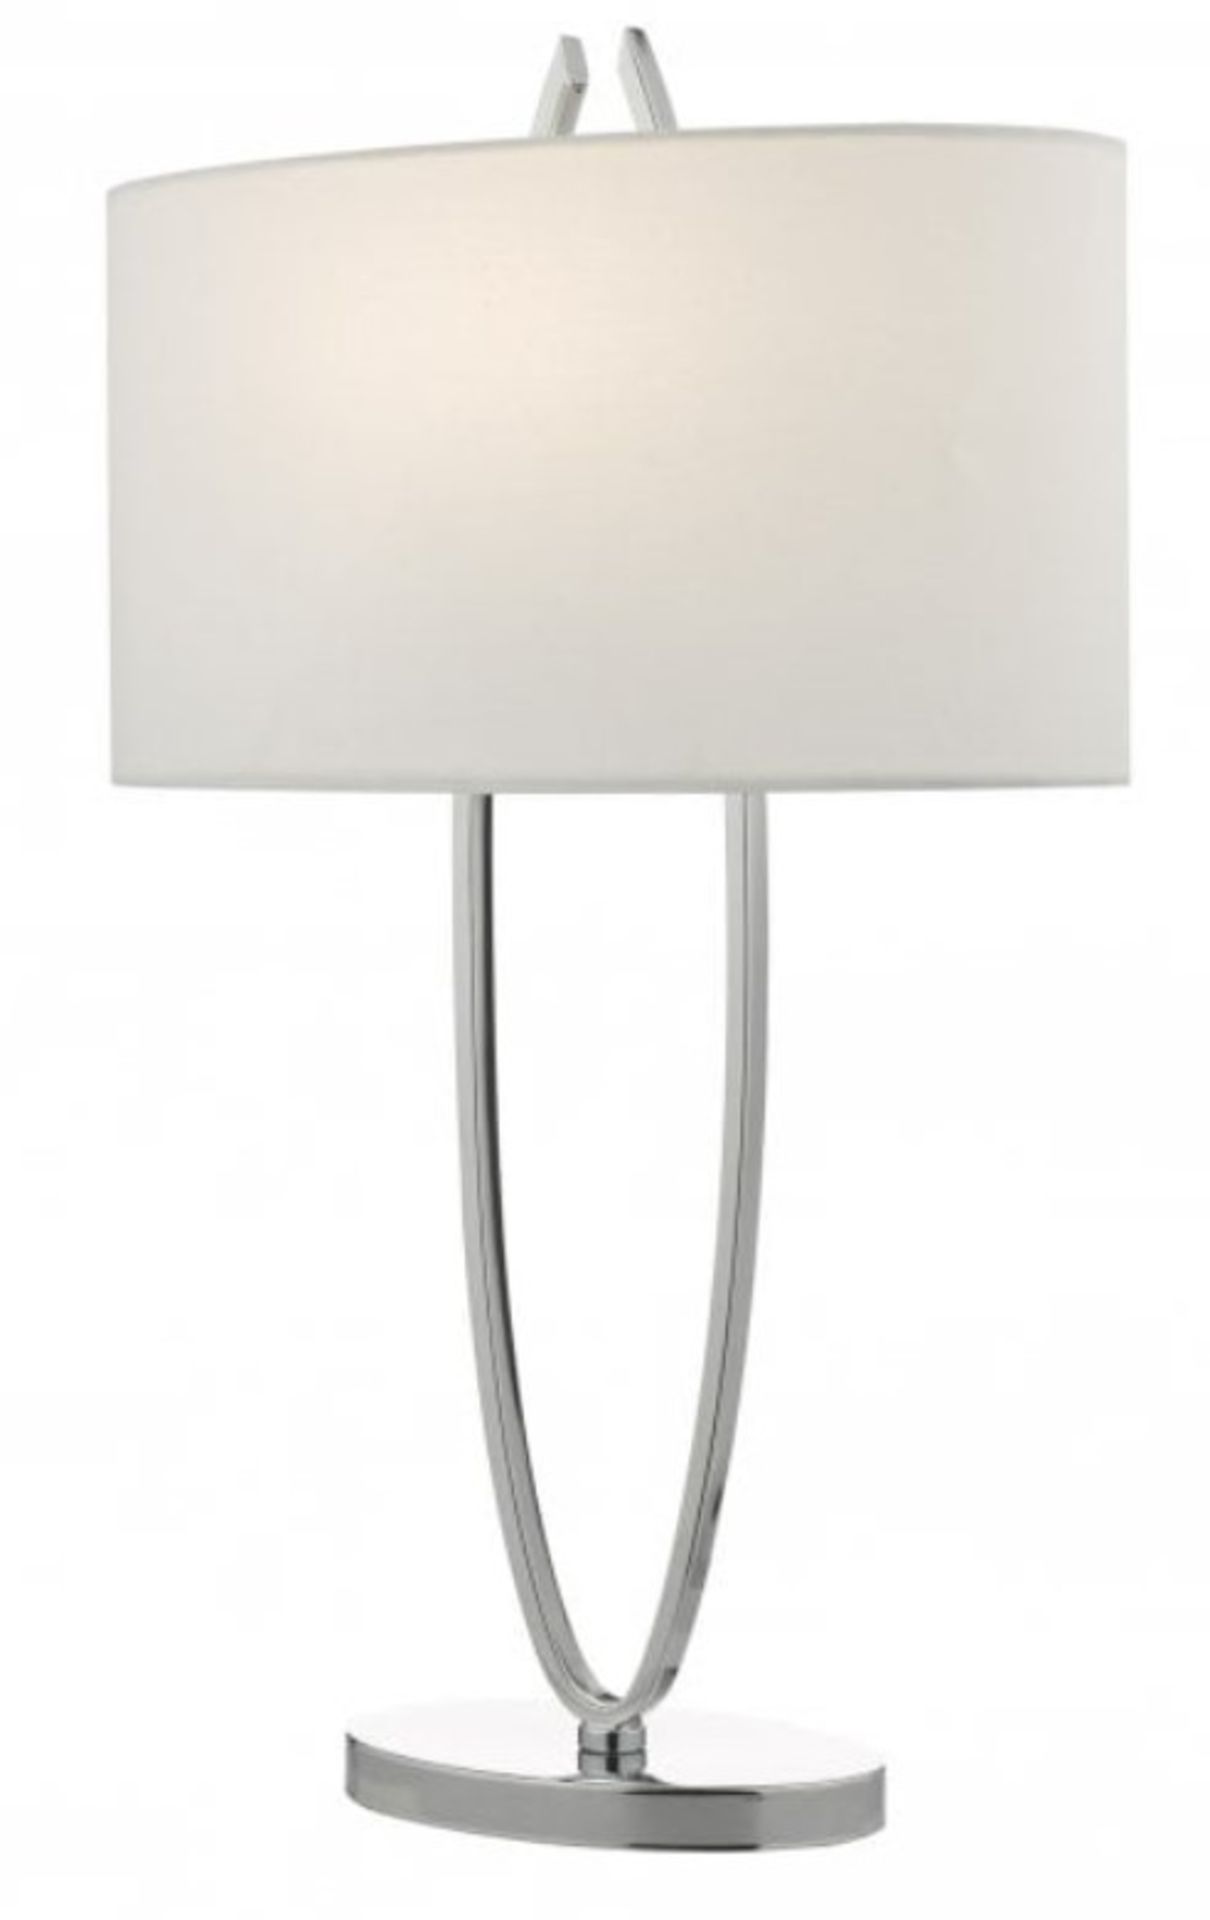 UTARA TABLE LAMP POLISHED CHROME WITH SHADE. The Dar Utara Table Lamp UTA4250 is a contempory